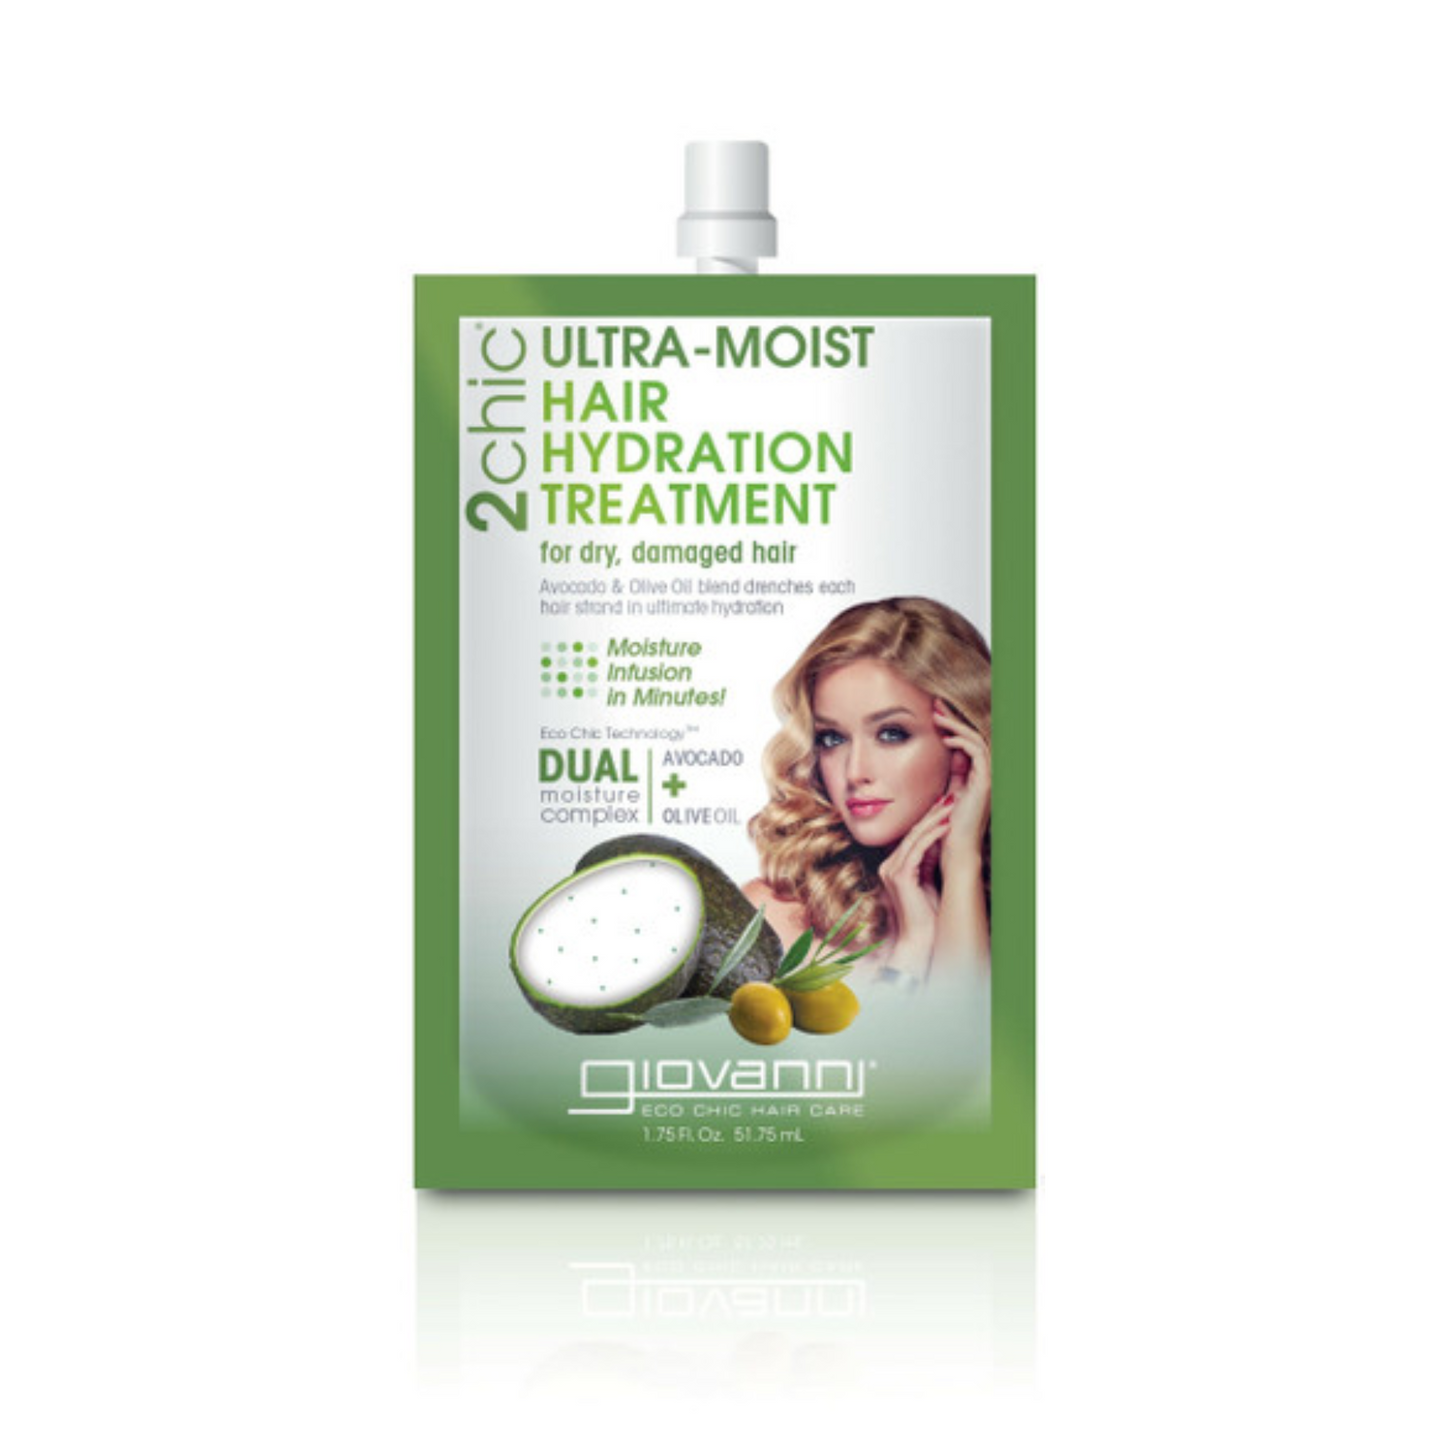 Giovanni 2Chic Ultra Moist Hair Hydration Treatment 51mL, For Dry & Damaged Hair